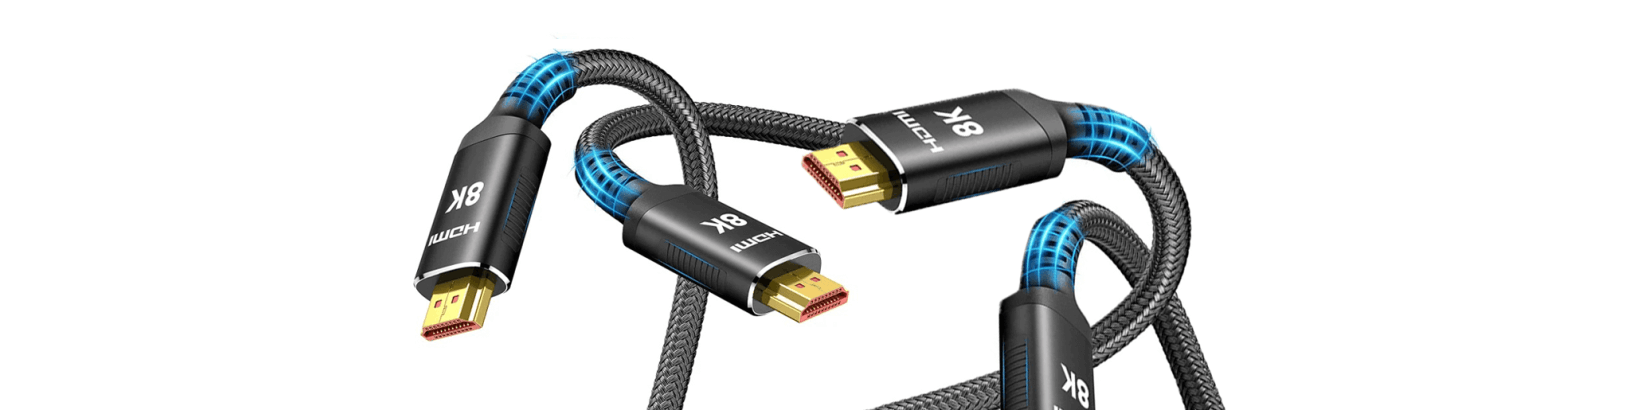 Câbles HDMI Tunisie - Scoop Informatique